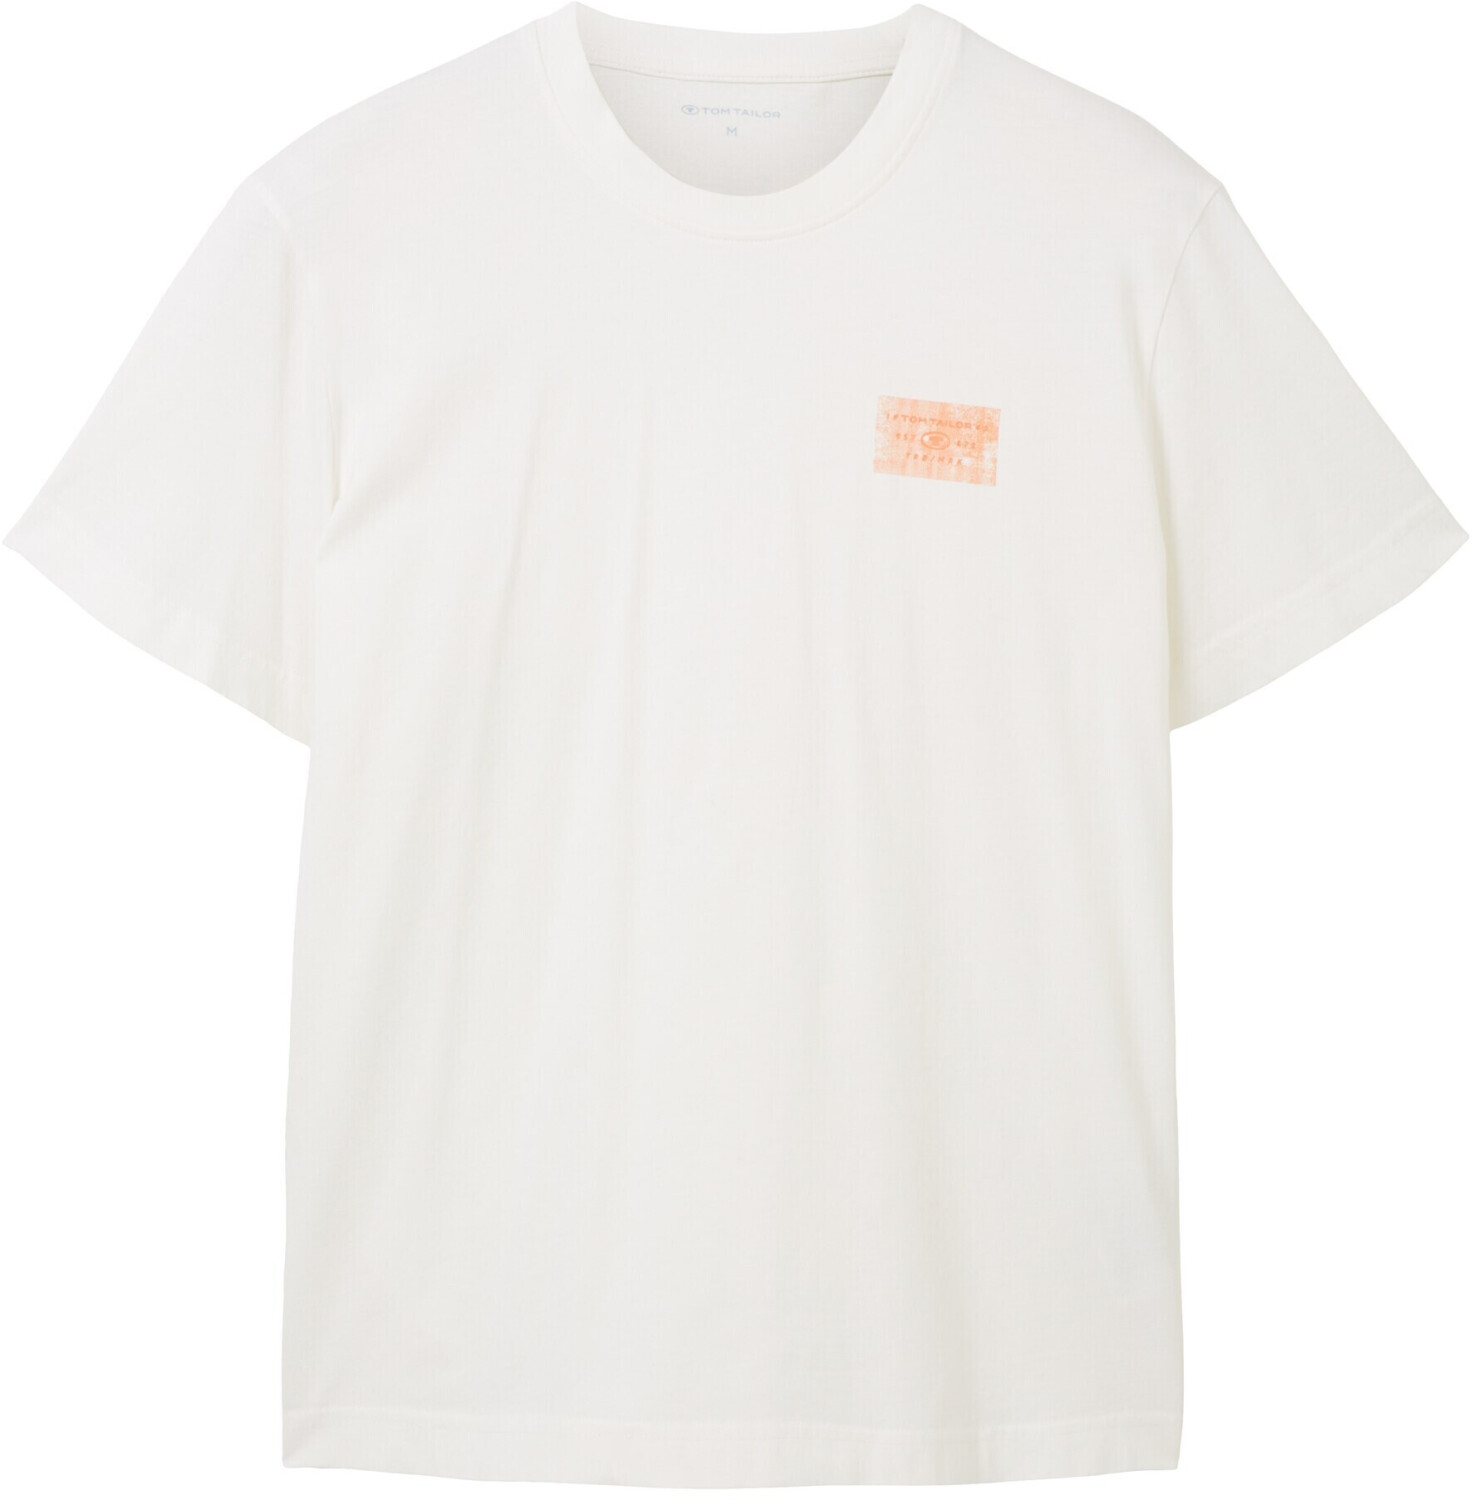 | € Tom off 7,47 Tailor T-Shirt ab Preisvergleich (1036431-10332) white mit Print bei